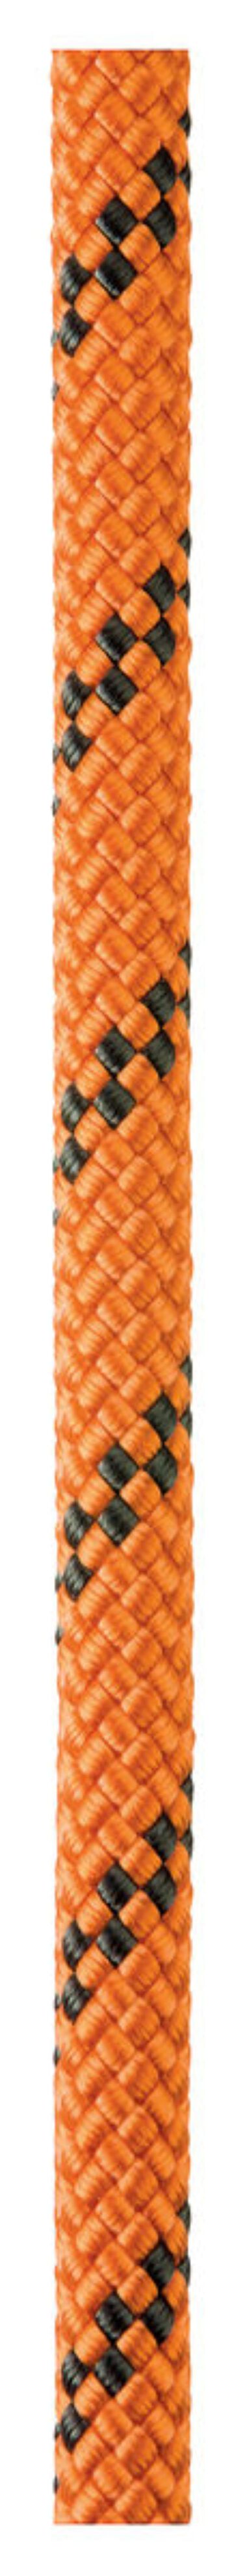 Petzl Low Stretch Kernmantel Rope 200m Orange, NFPA